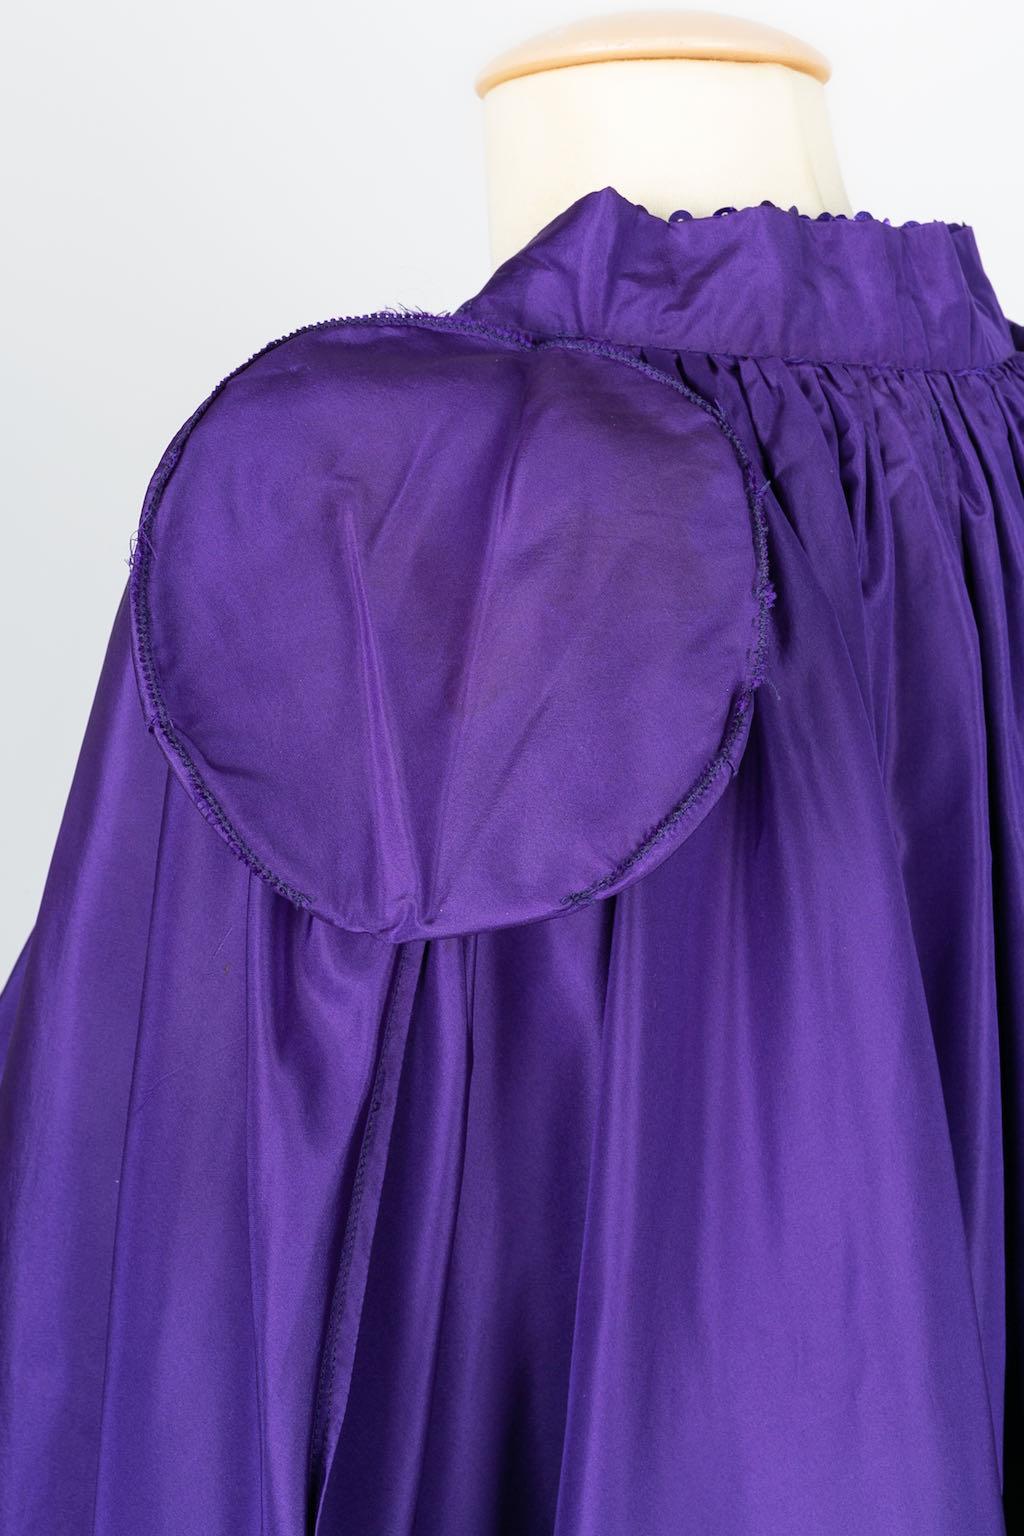 Azzaro Evening Taffeta Cape Embroidered Dress, Size 40FR 11